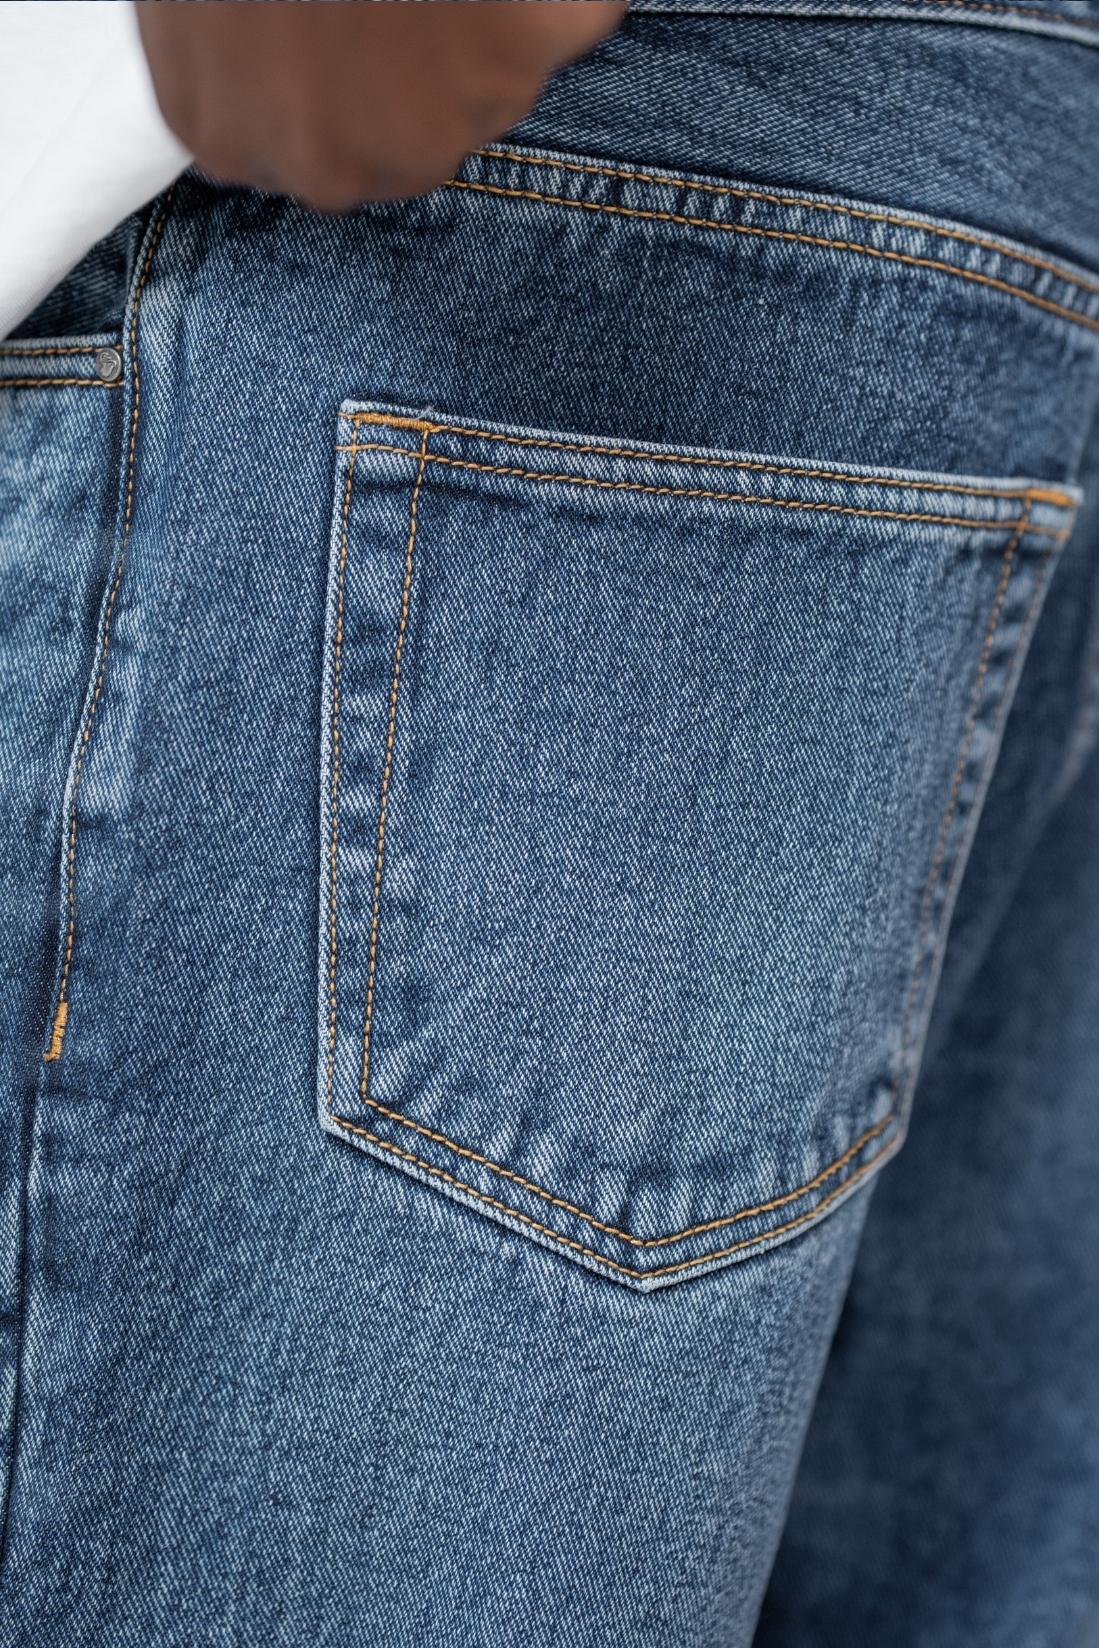 Denim Jeans (Mid Blue) - Skagen Clothing DK